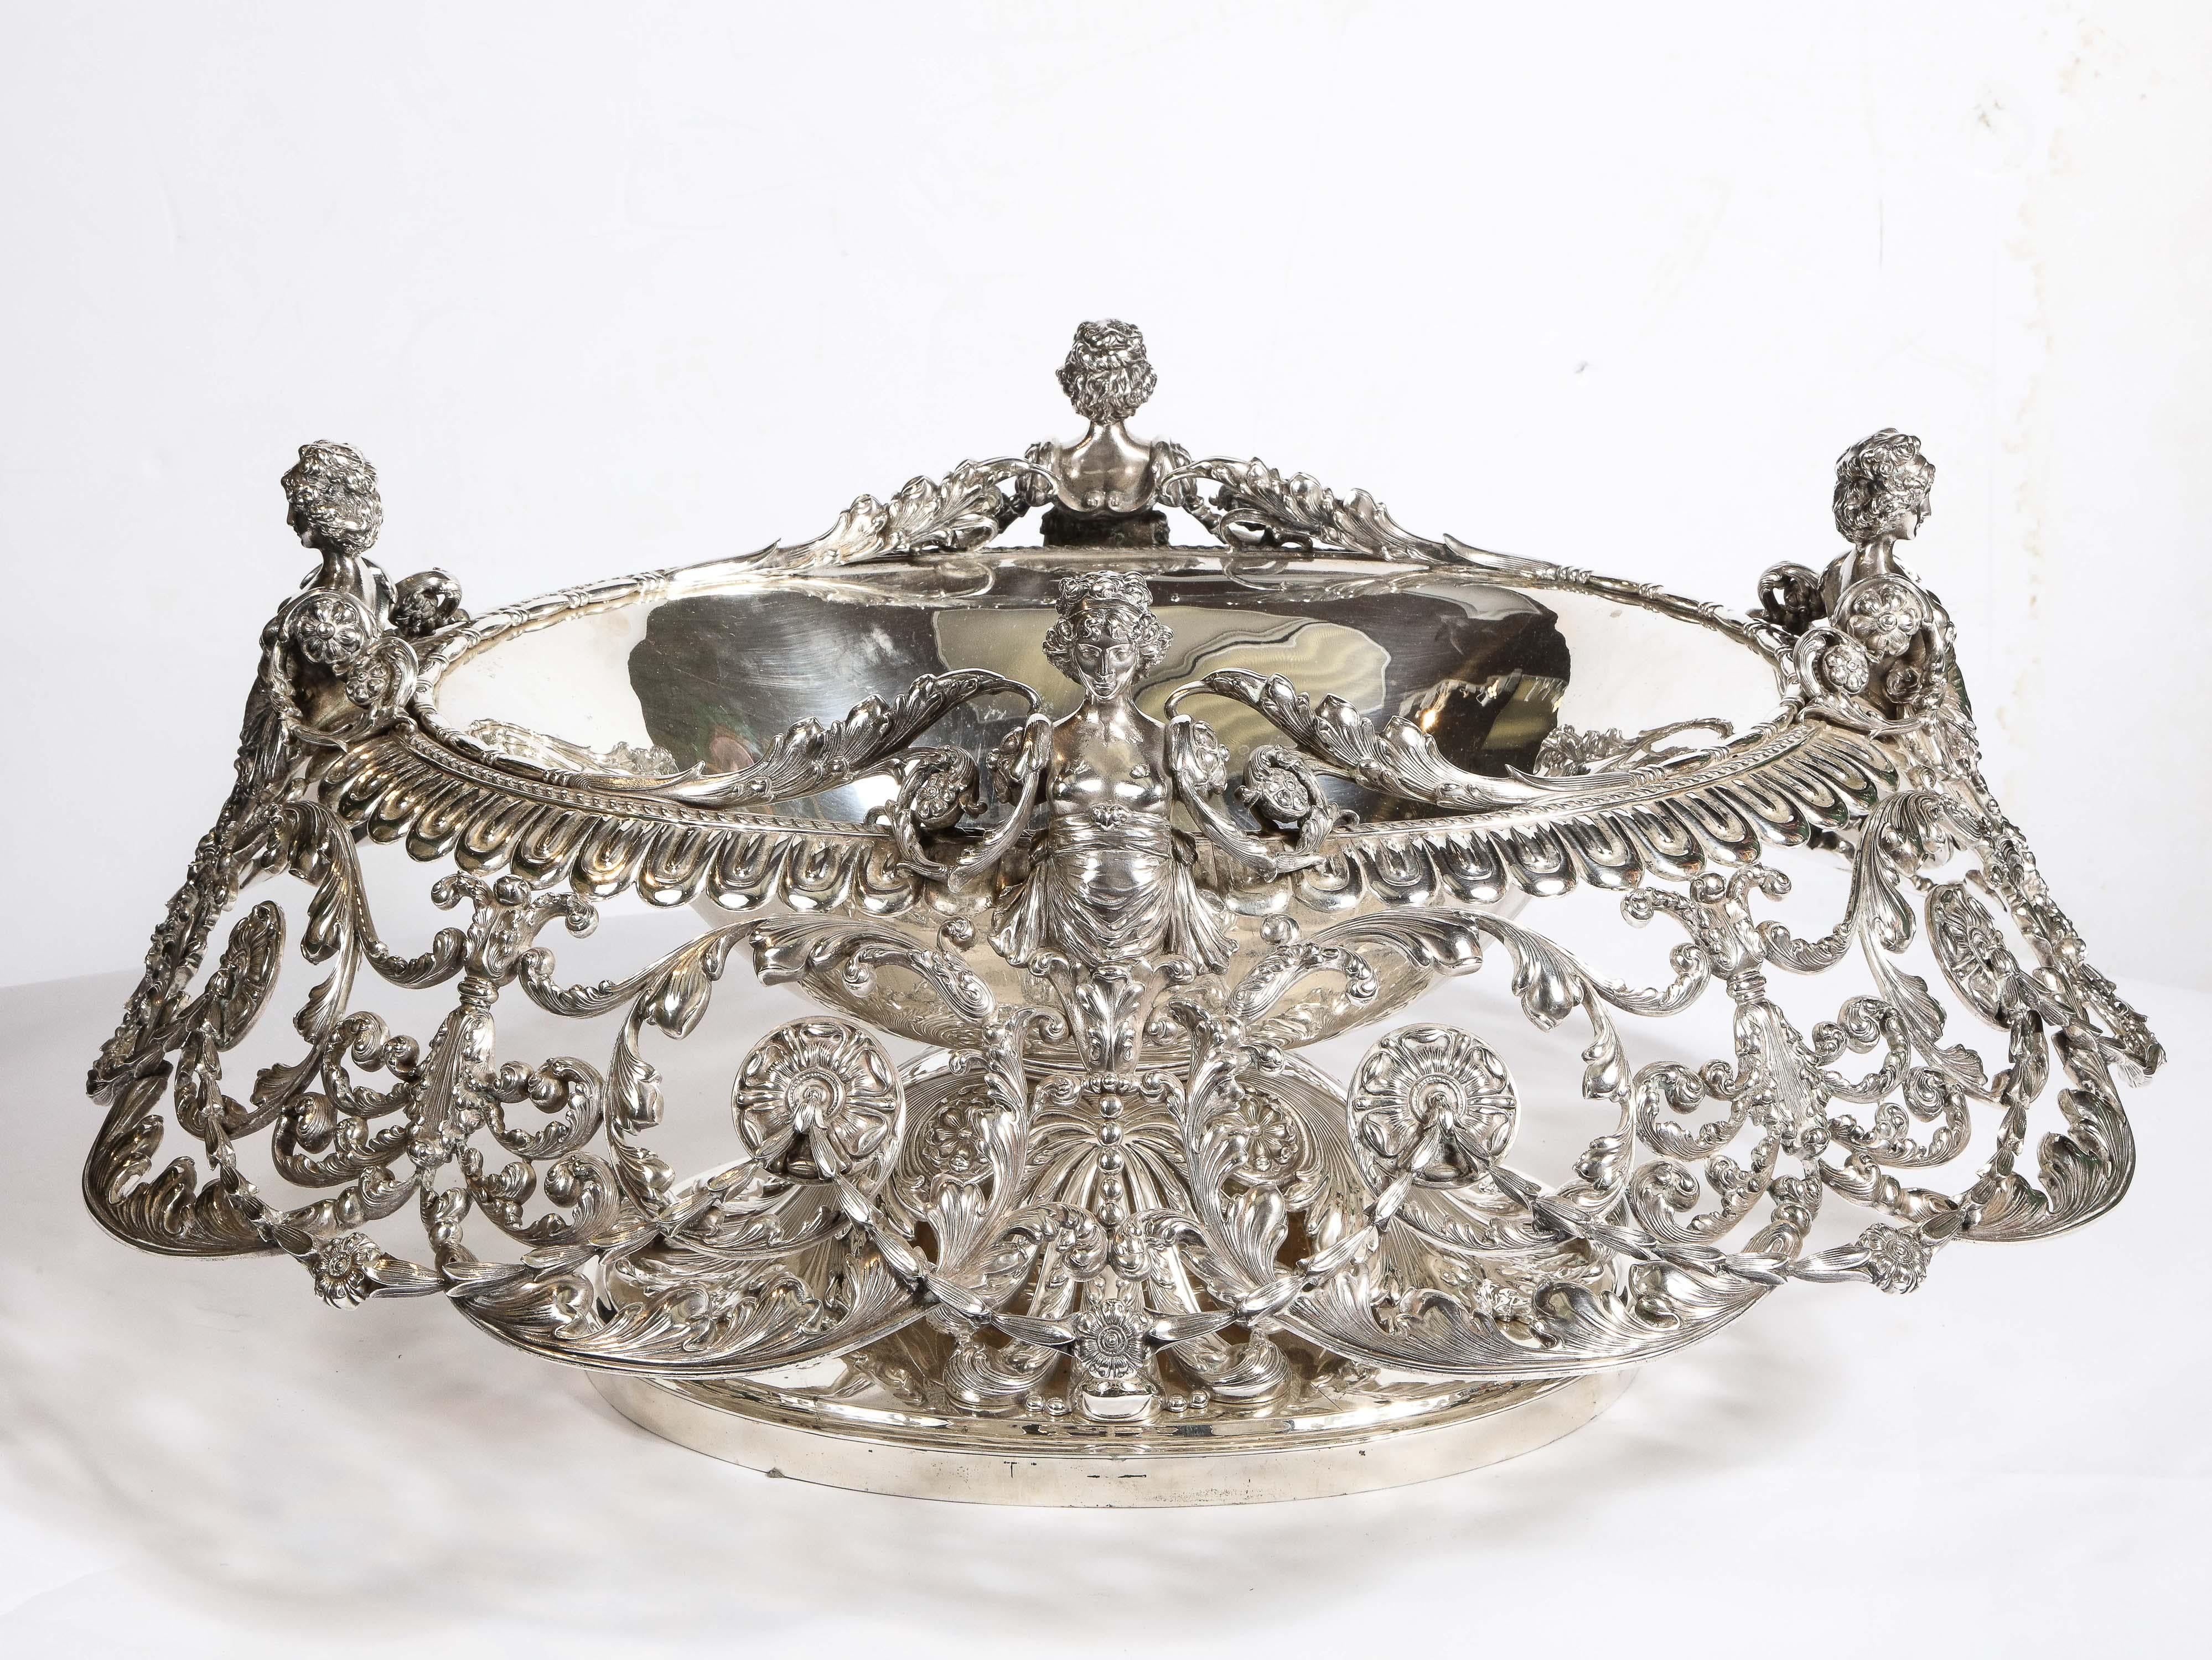 Tiffany & Company, George Paulding Farnham, A Rare, Lavish Silver Centerpiece For Sale 9